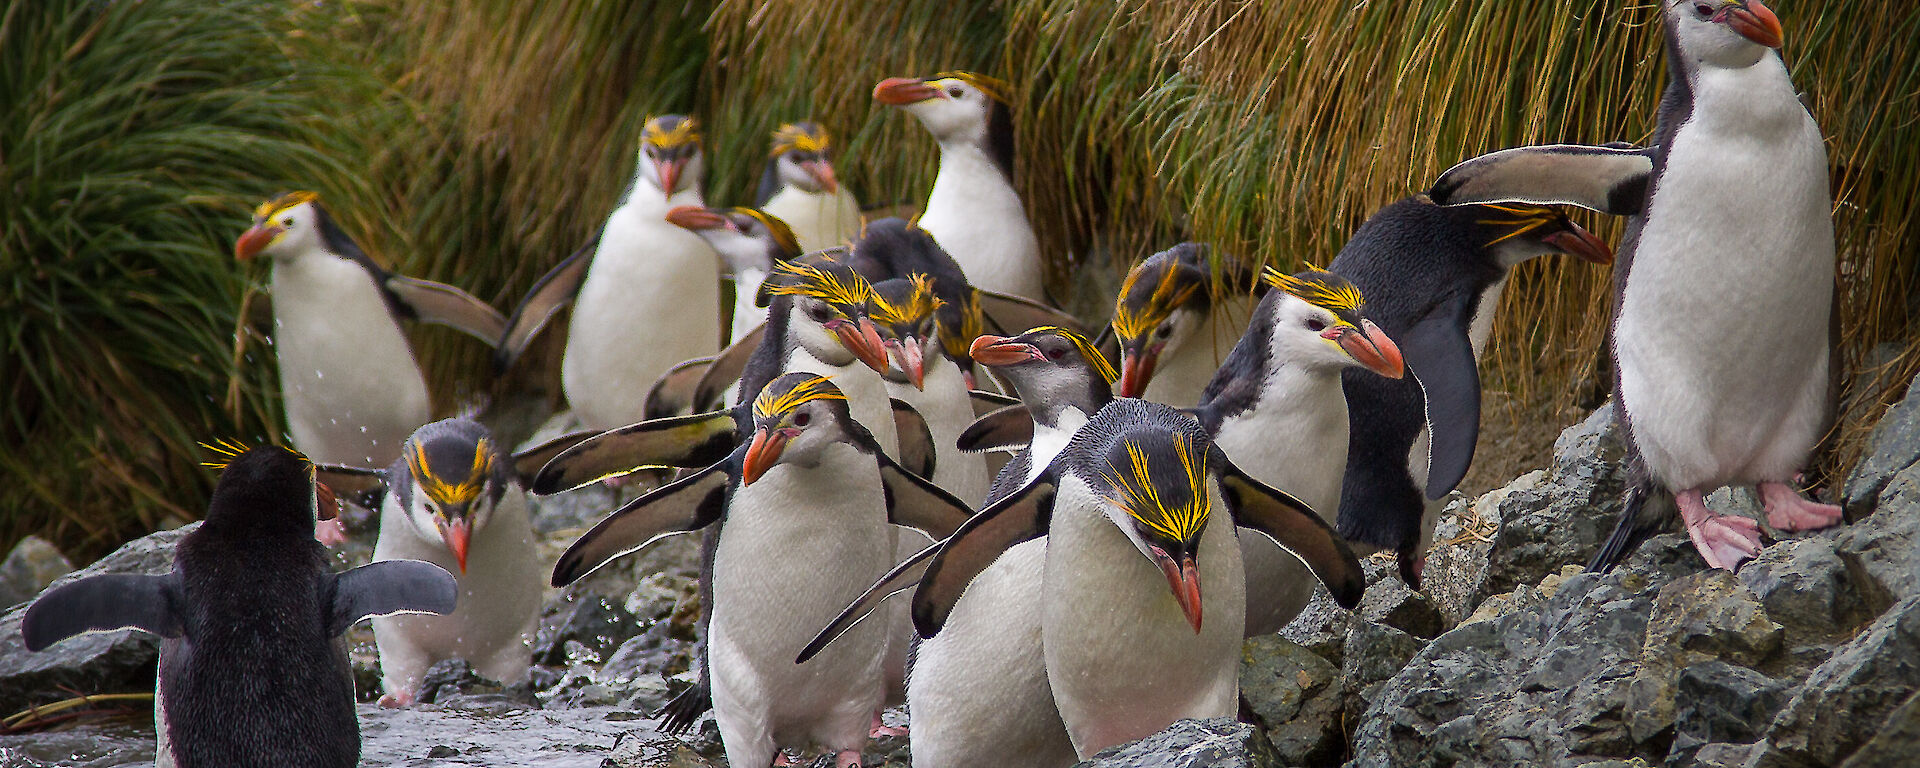 Group of royal penguins walking up a creek